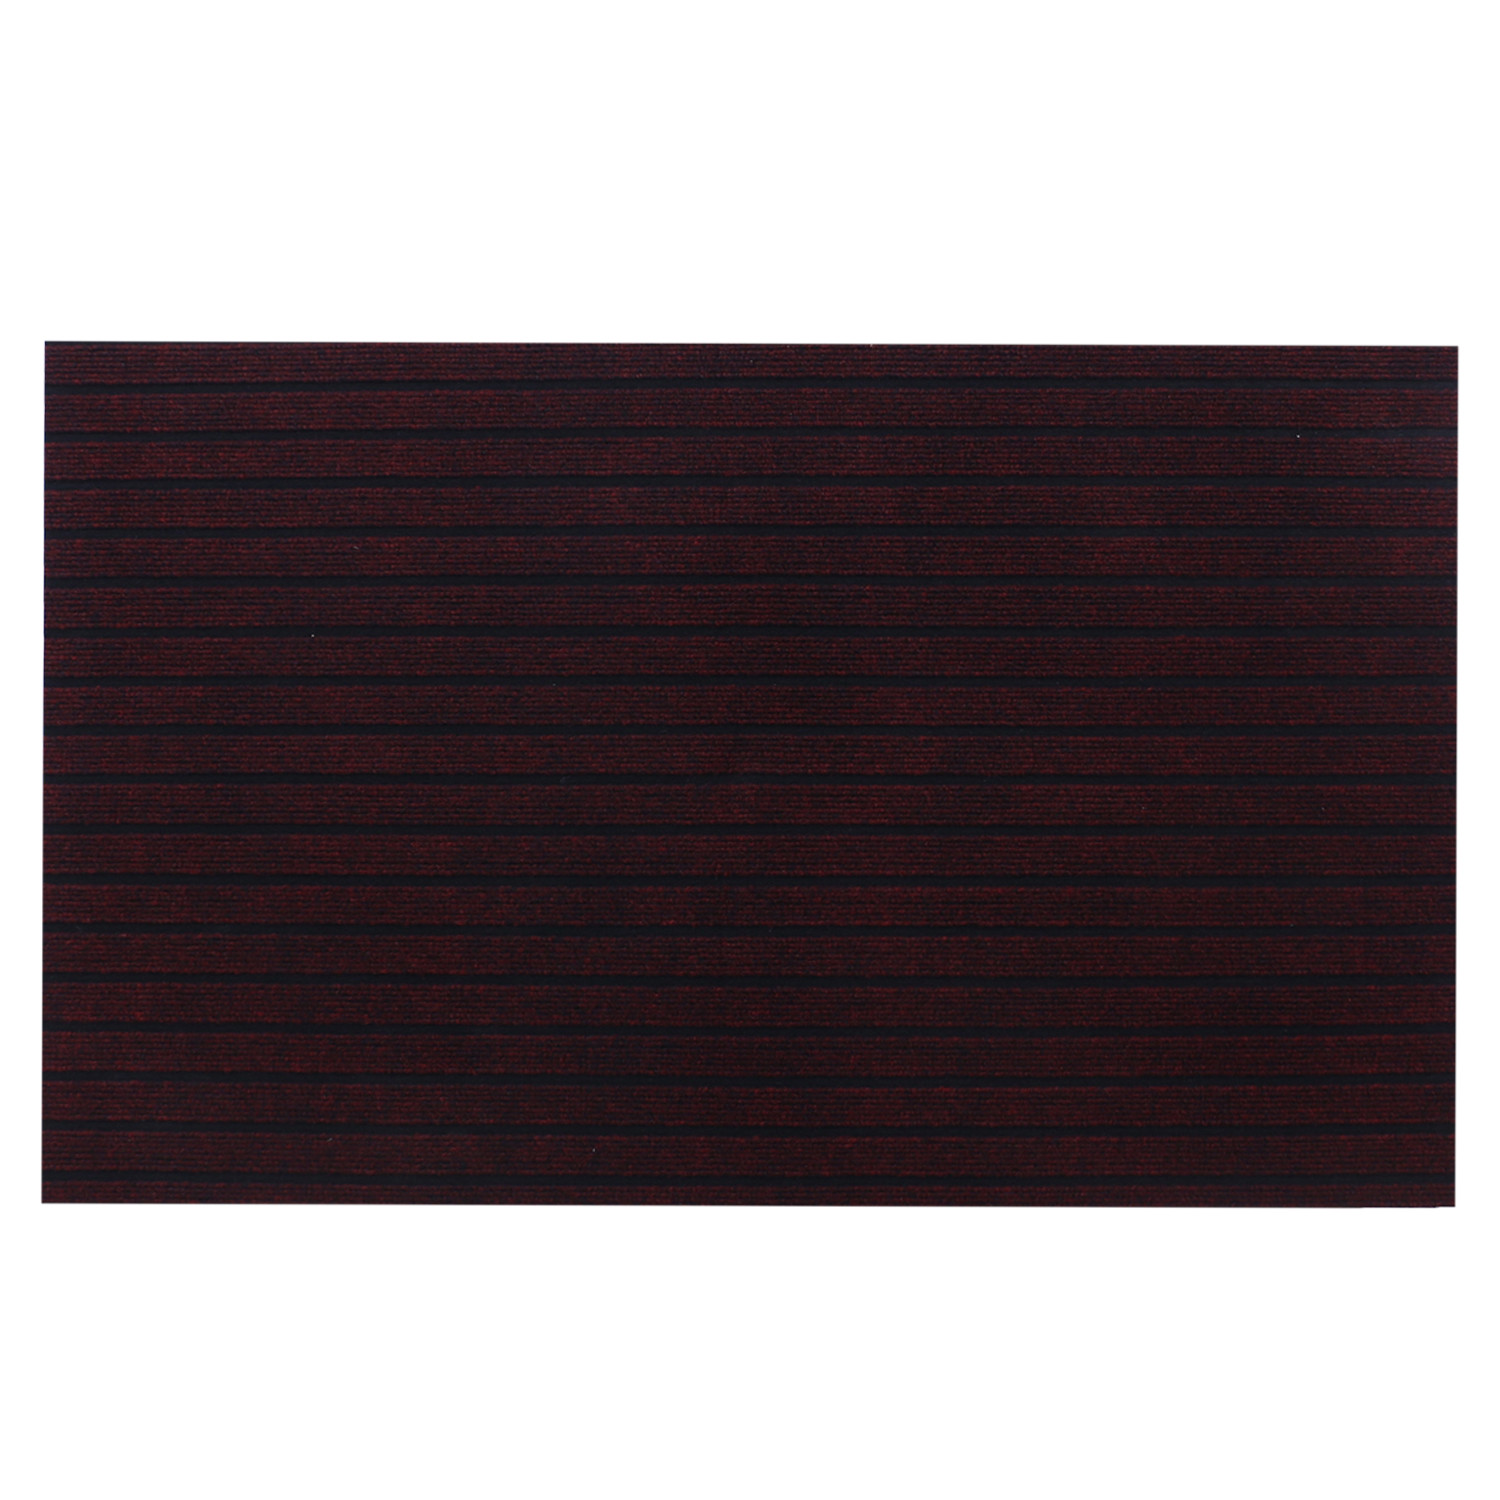 Kuber Industries Microfiber Striped Solid Anti-Slip Large Door Mat|Bath mat for Home,Living Room Entrance,24